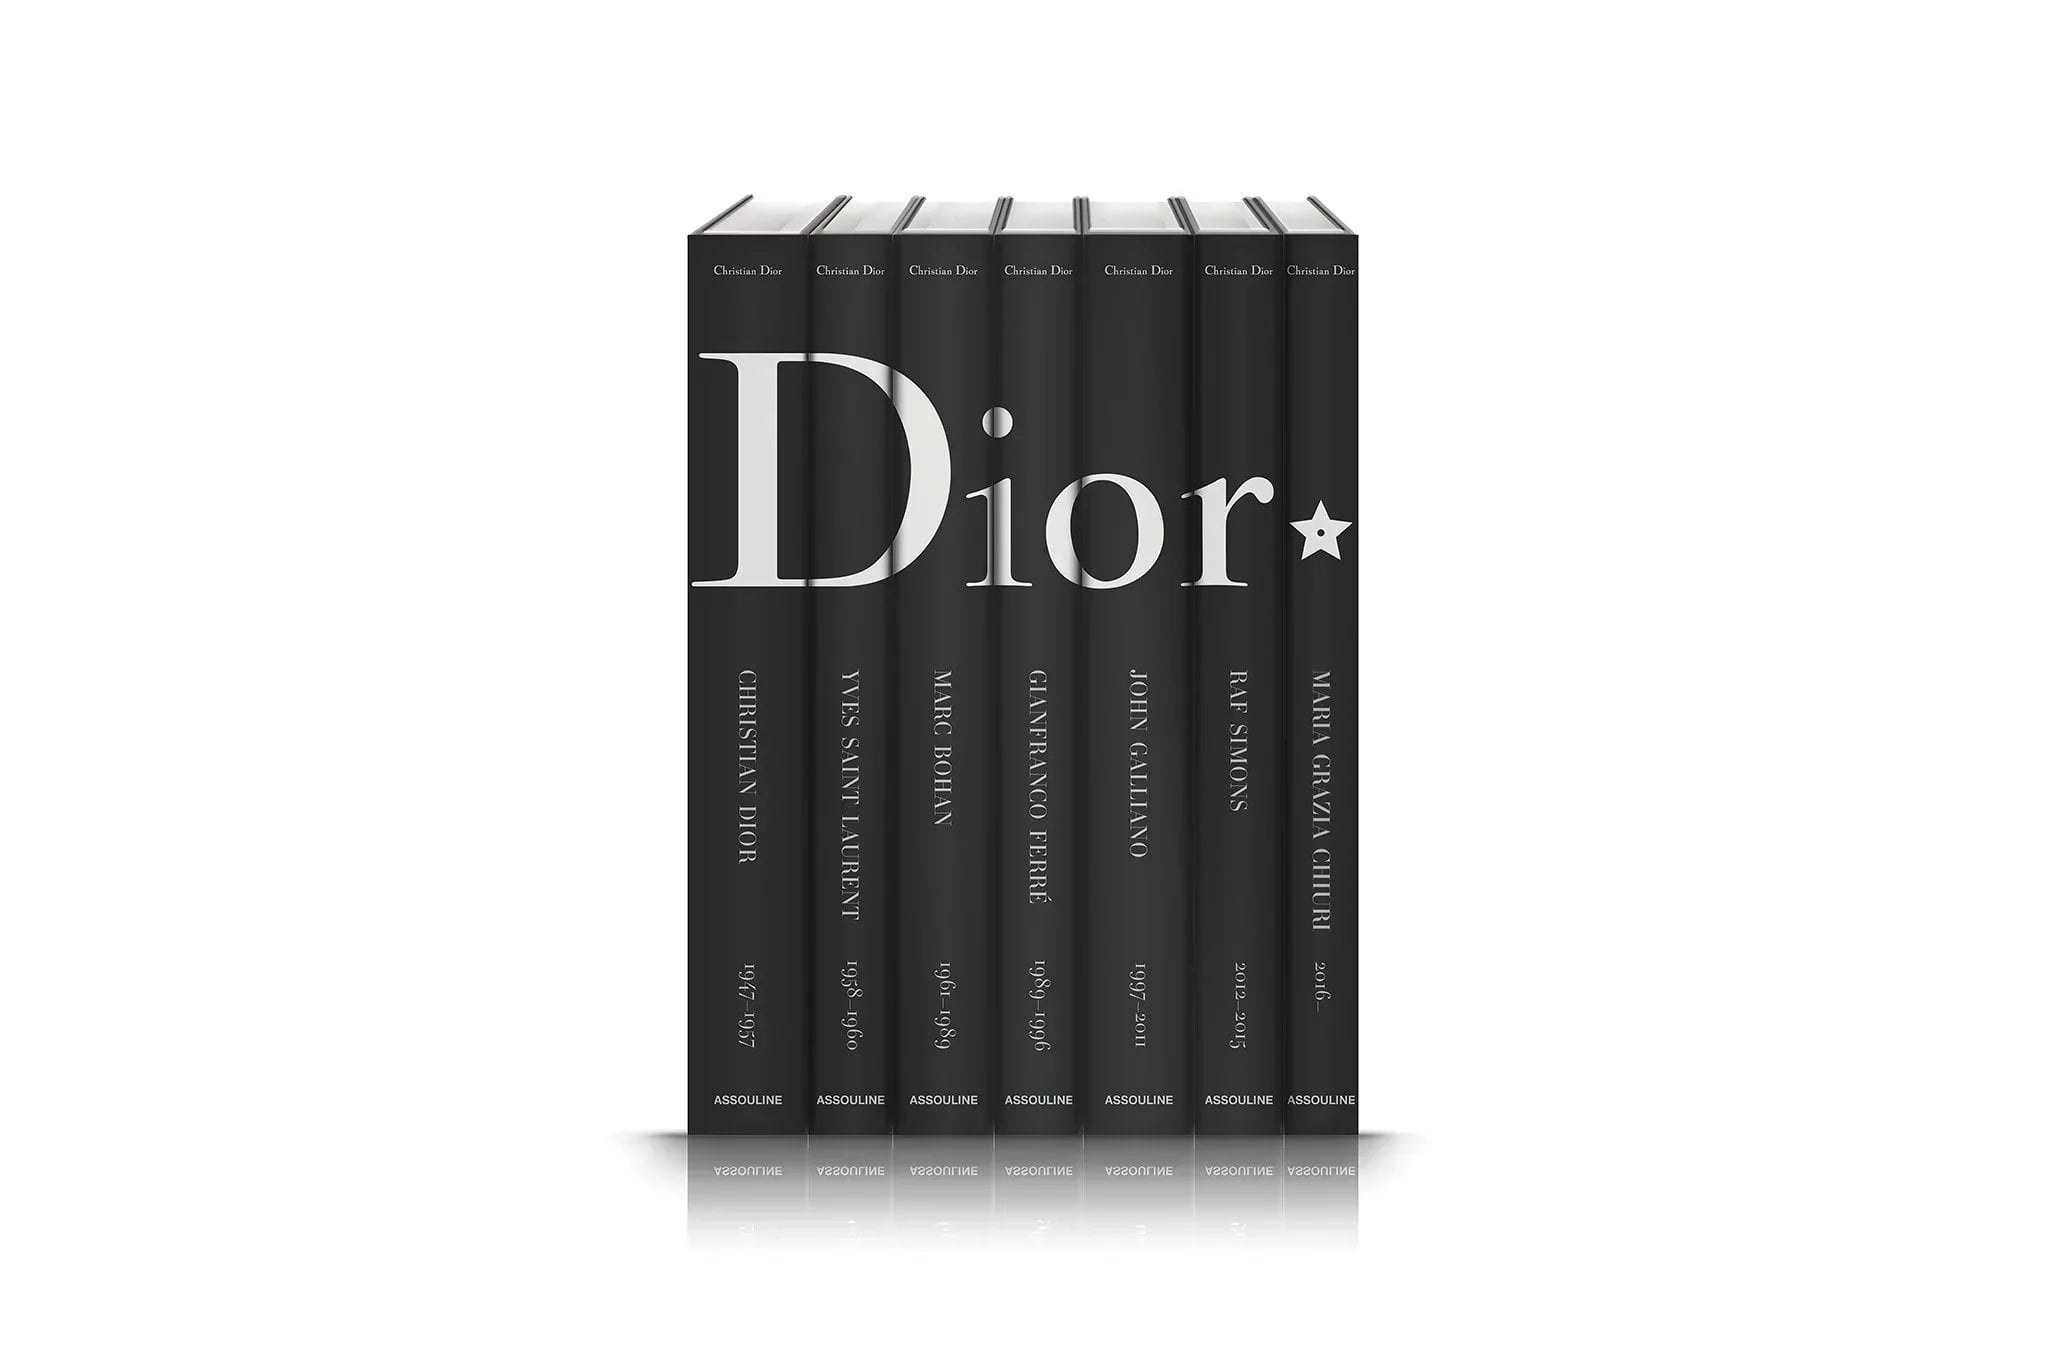 dior by christian dior: 1947-1957 3